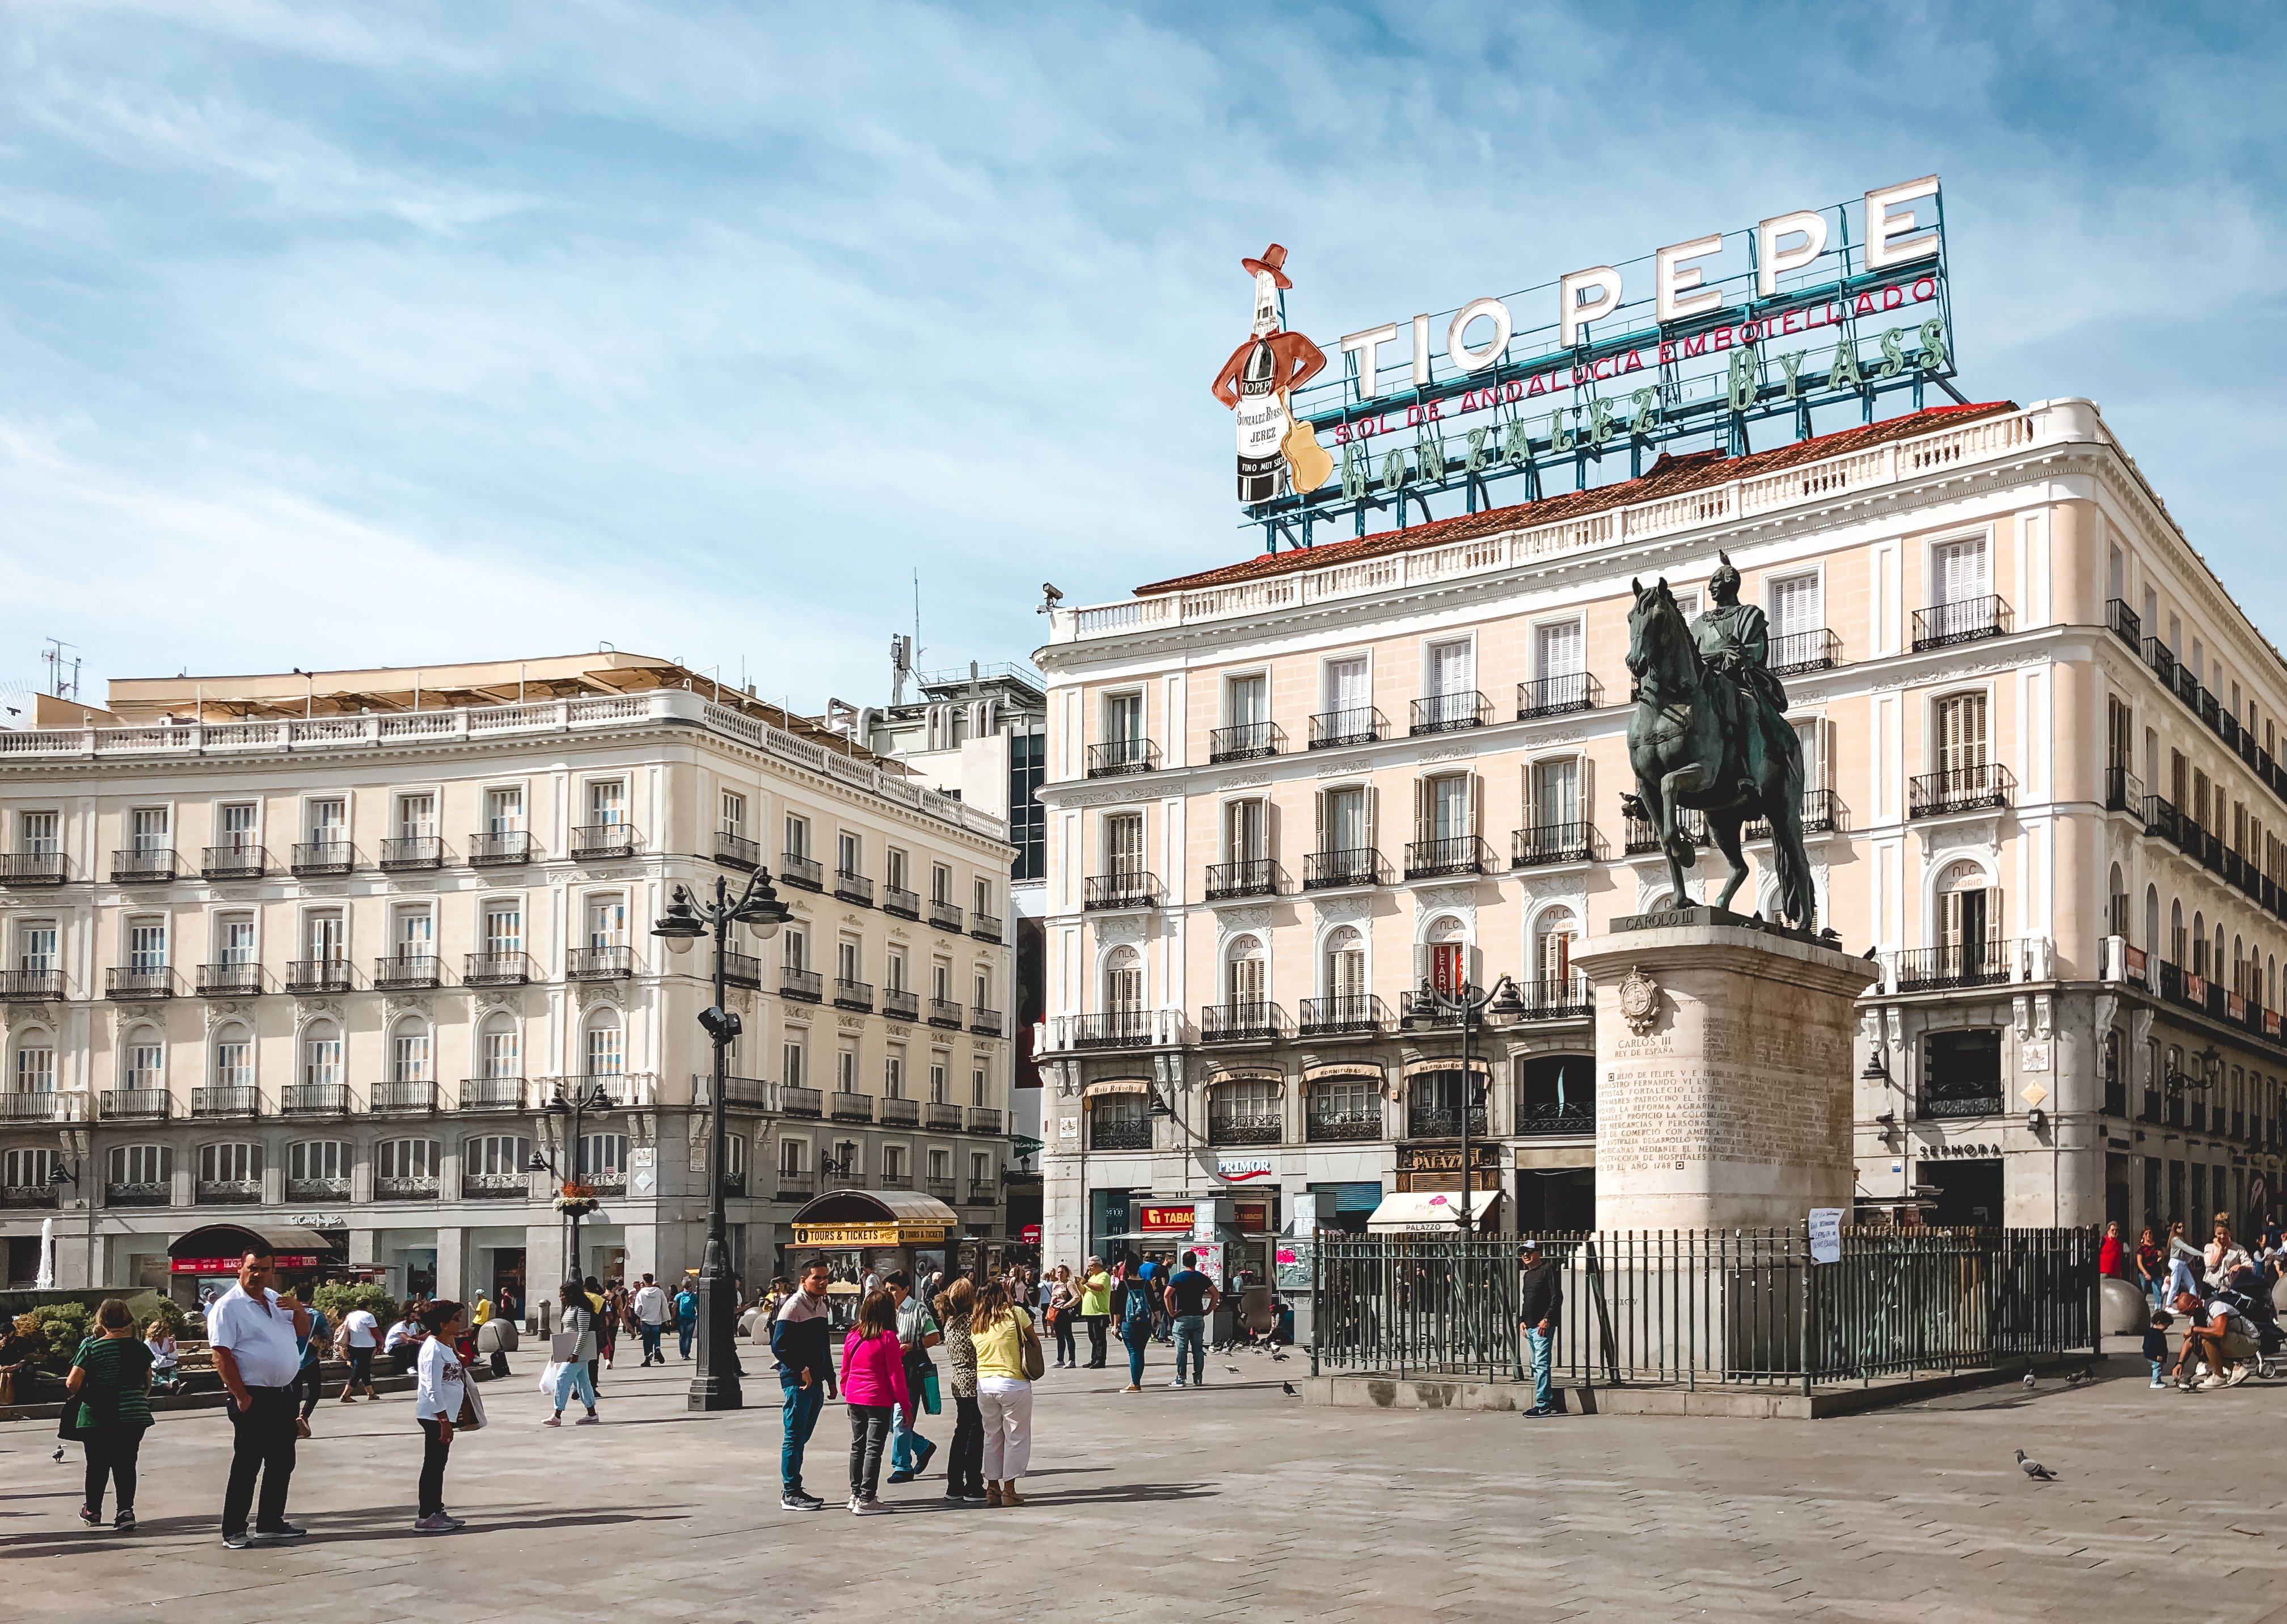 Muslim travel guide for Madrid, Spain